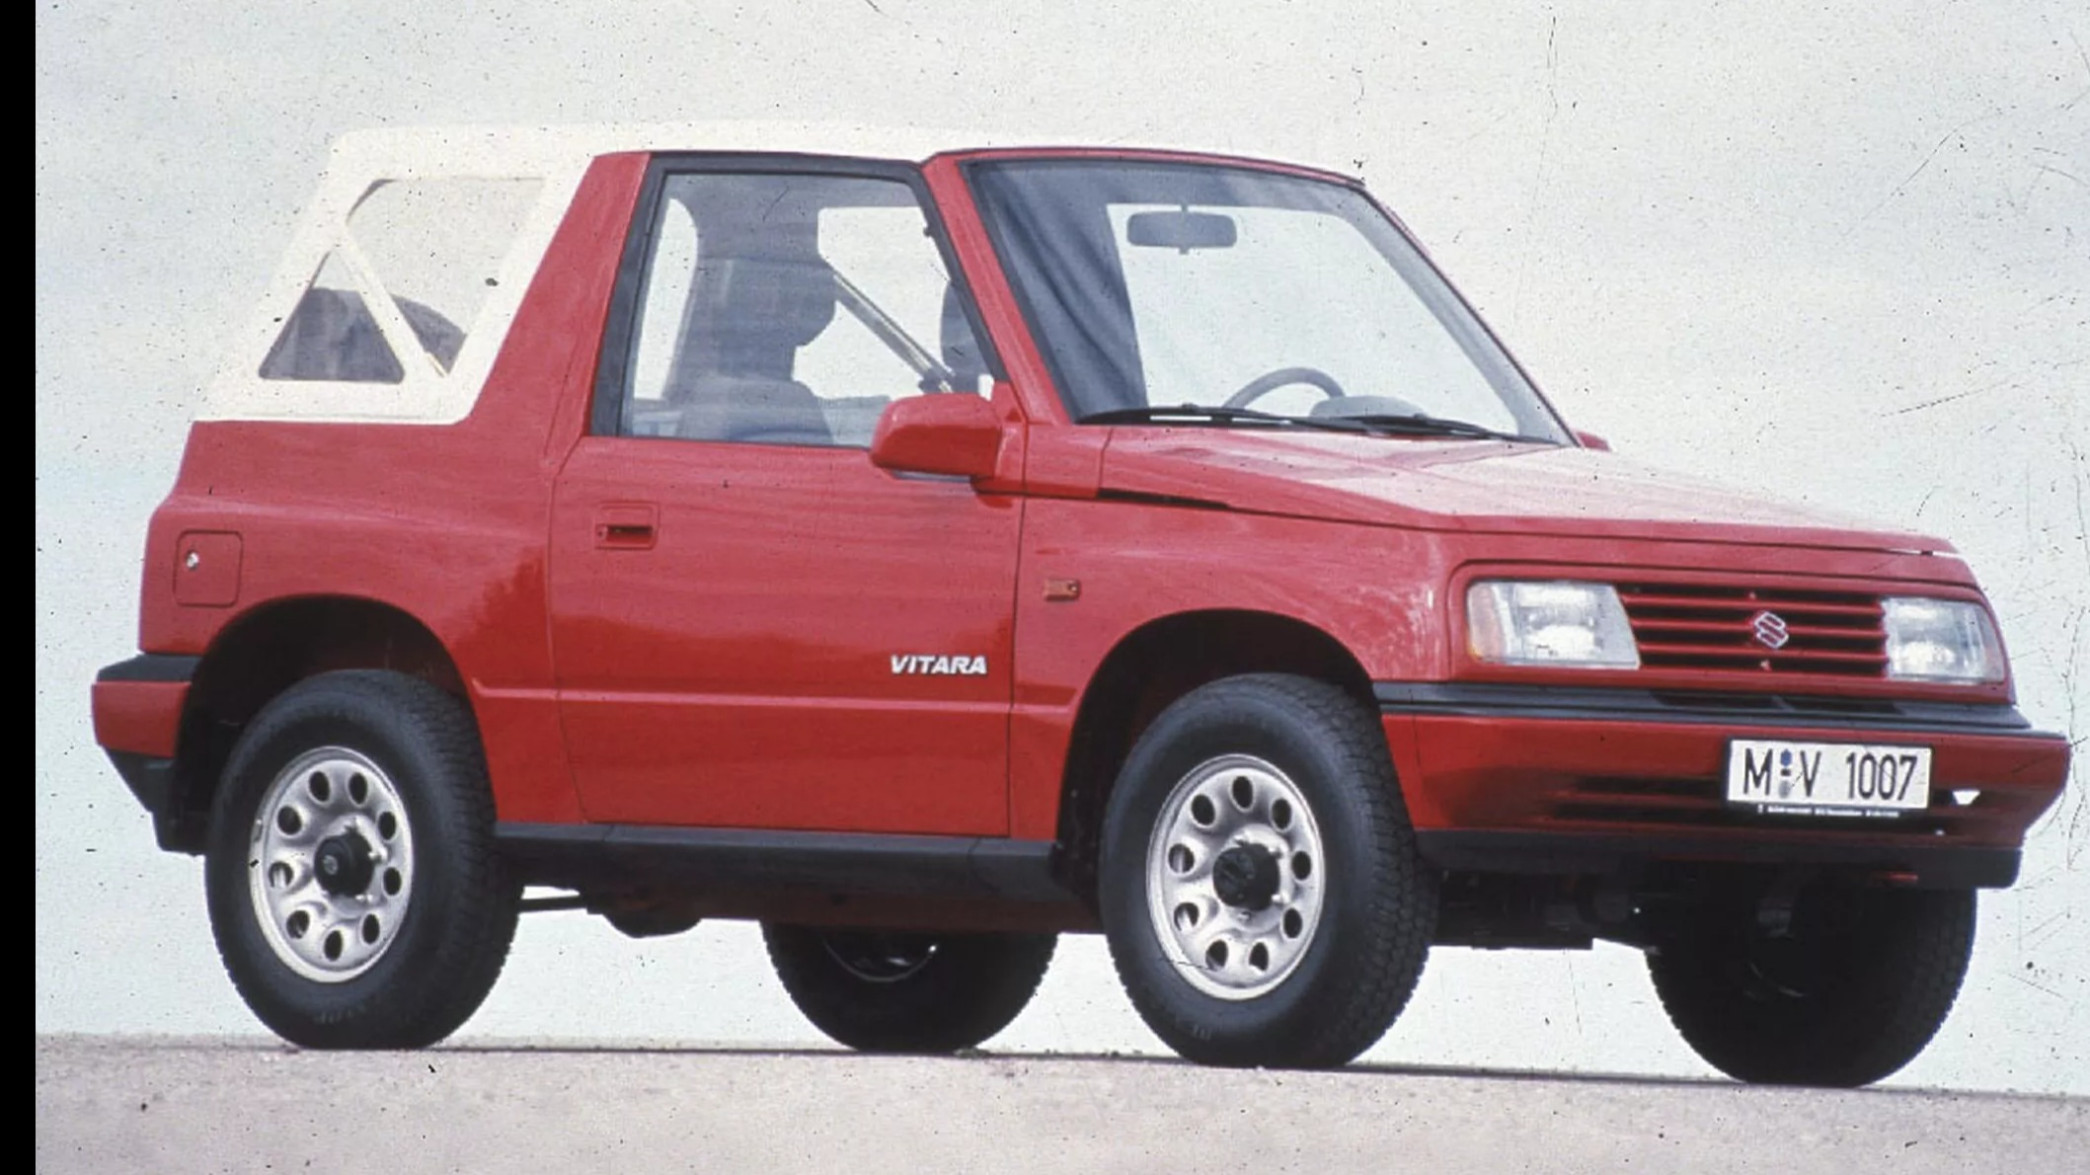 SUZUKI CELEBRE LE 35e ANNIVERSAIRE DU VITARA, LE PIONNIER DES SUV COMPACTS DEPUIS 1988